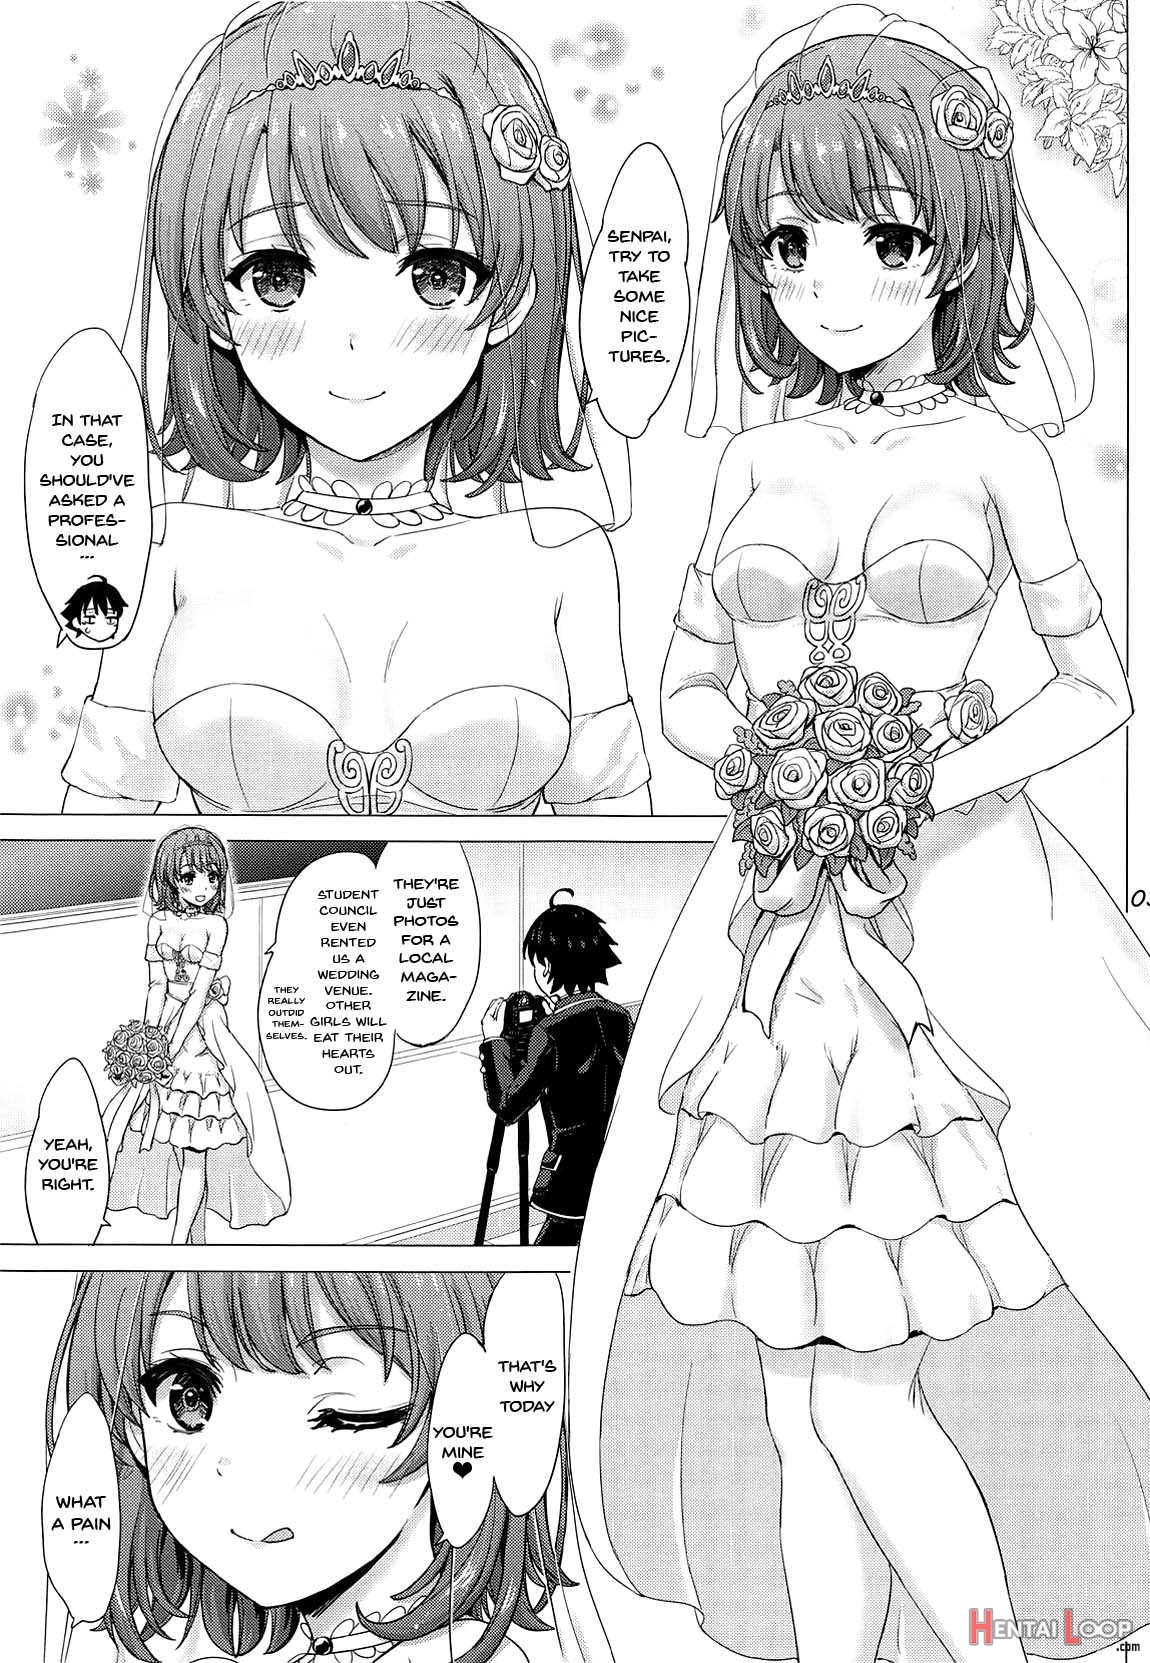 Wedding Irohasu! - Iroha's Gonna Marry You After Today's Scholl! page 2